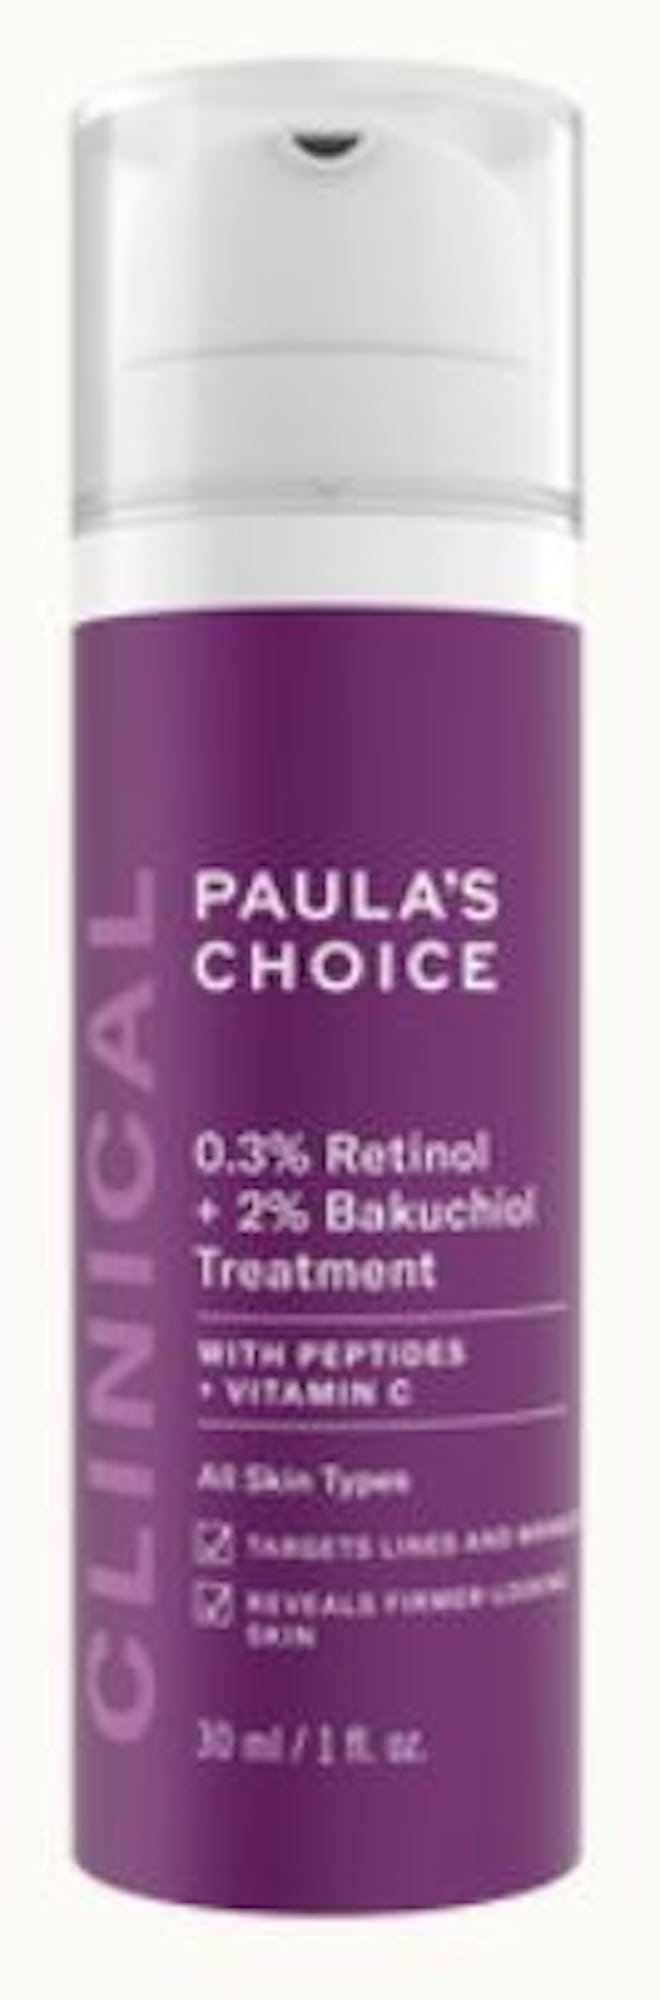 Paula's Choice 0.3% Retinol + 2% Bakuchiol Treatment for anti-aging results